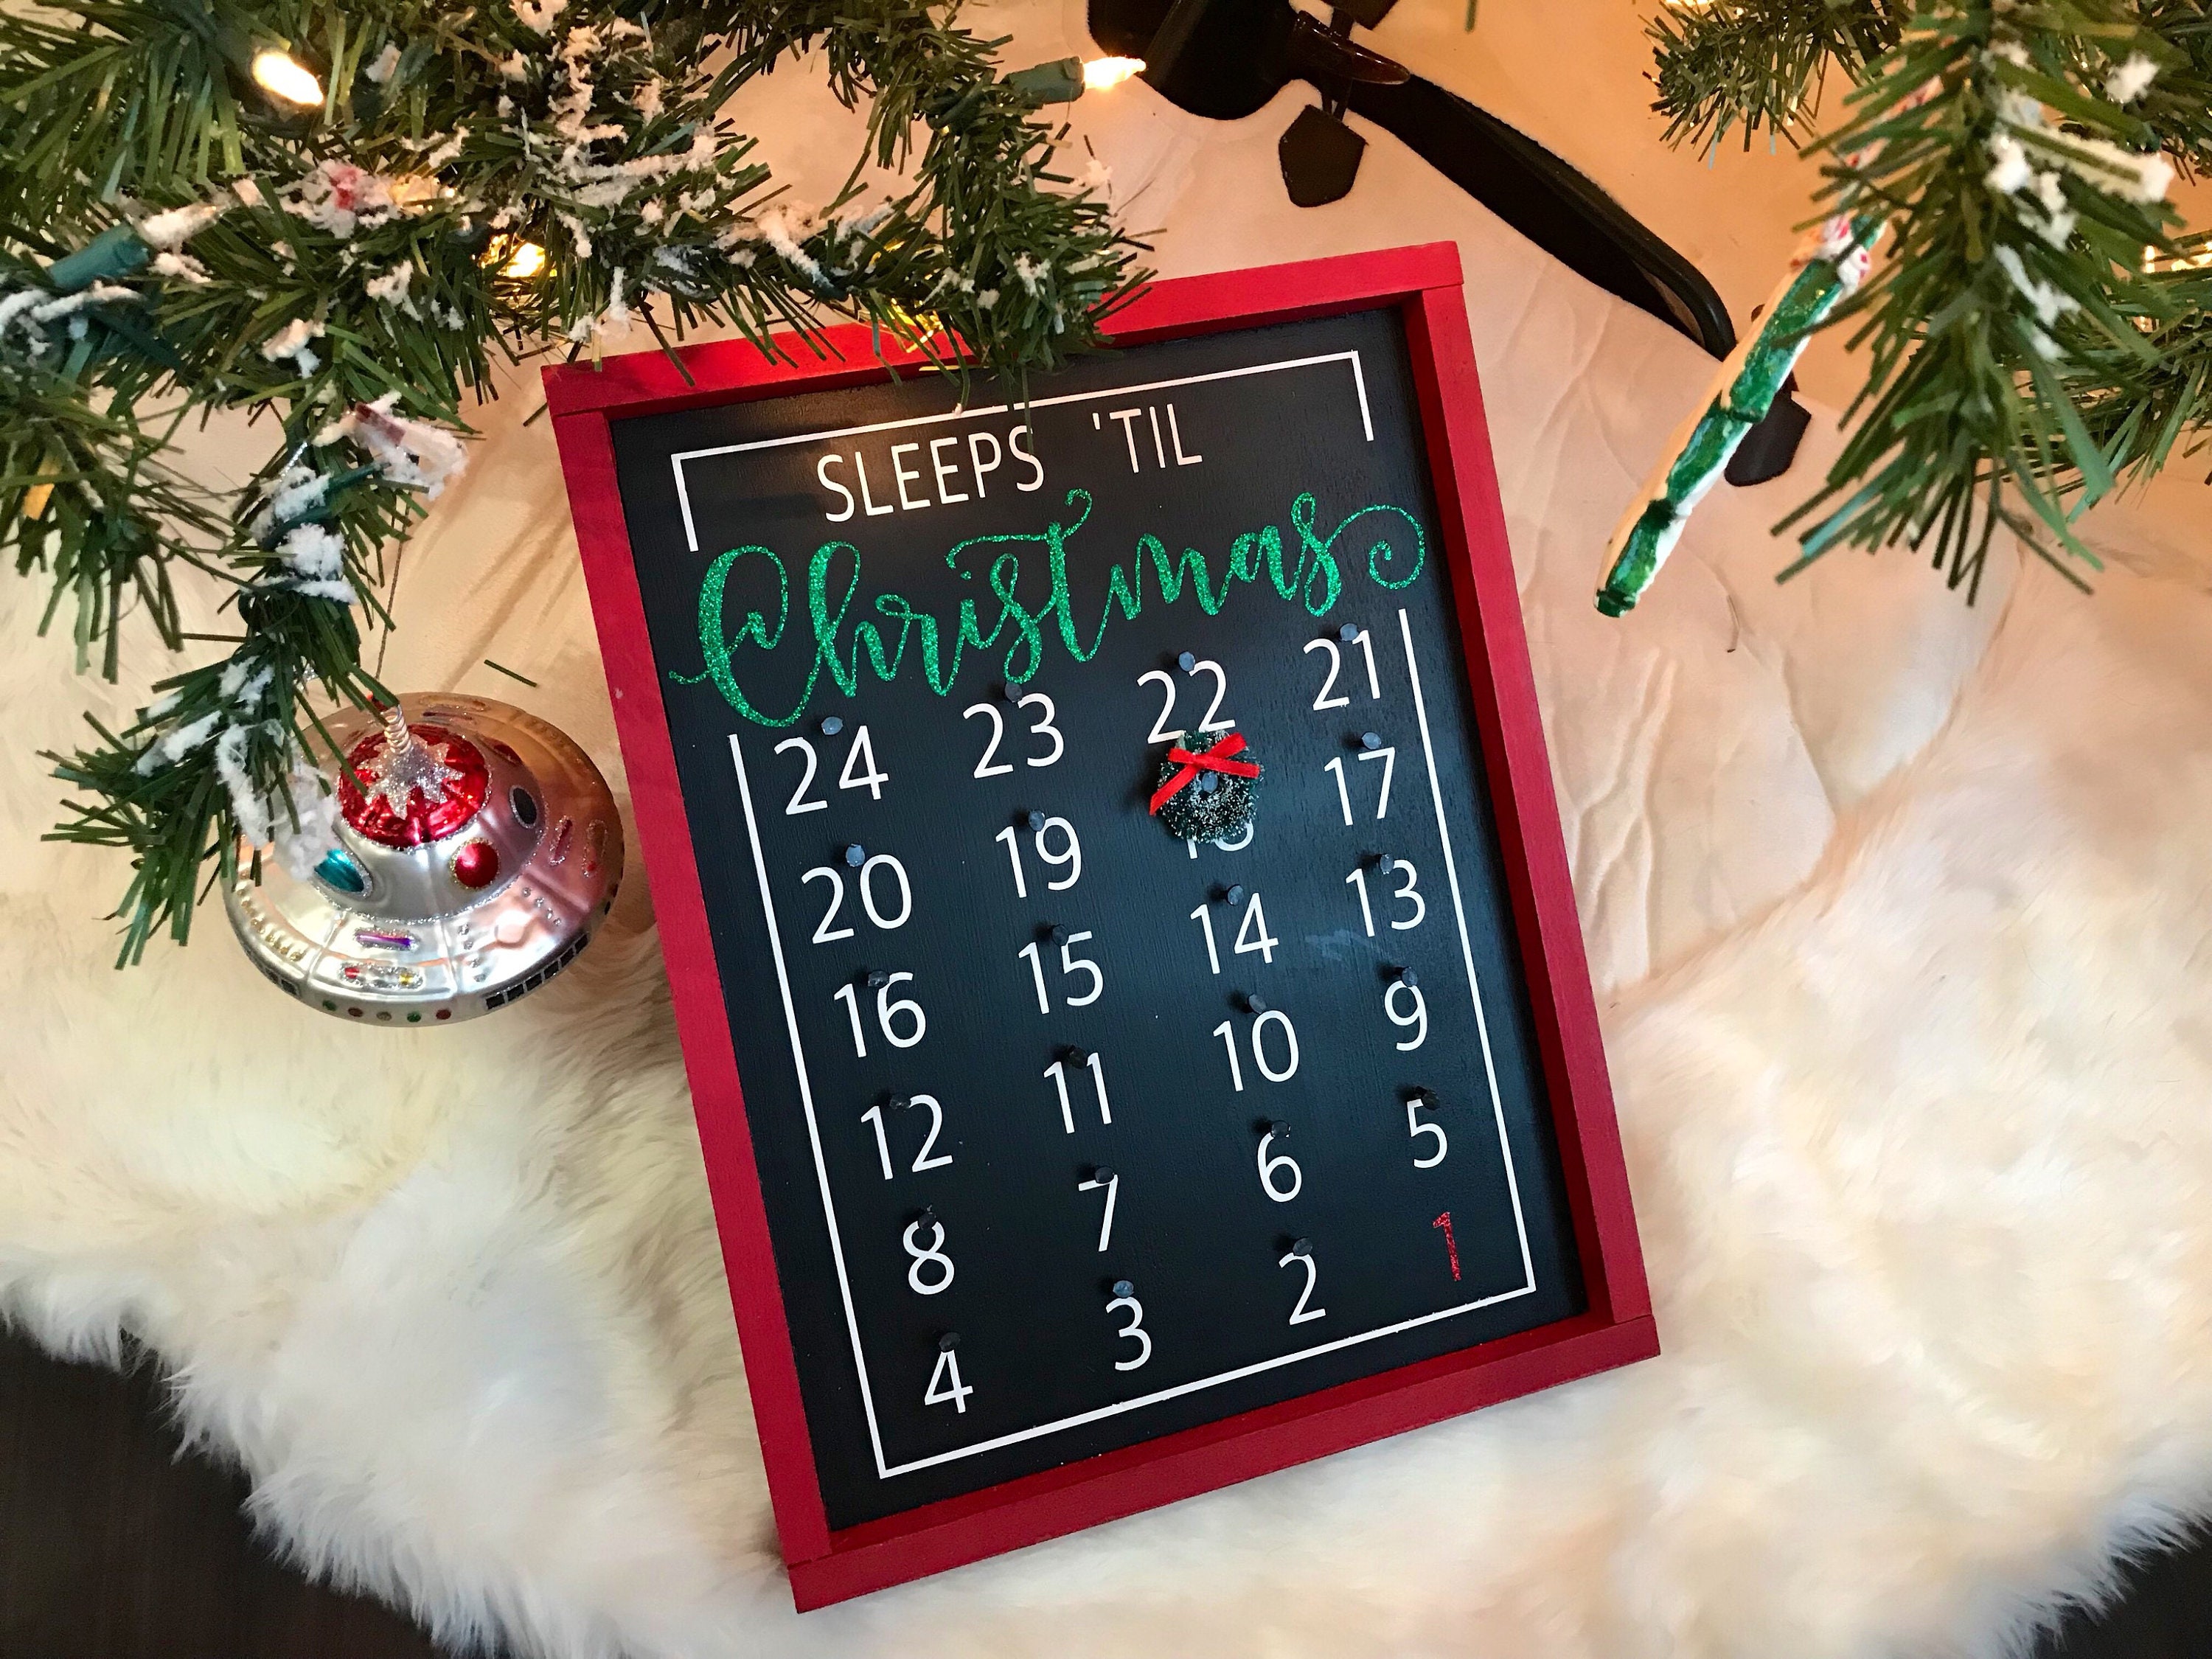 Days Till Christmas Sign Christmas Countdown Holidays Home Living Wall Hangings Kromasol Com